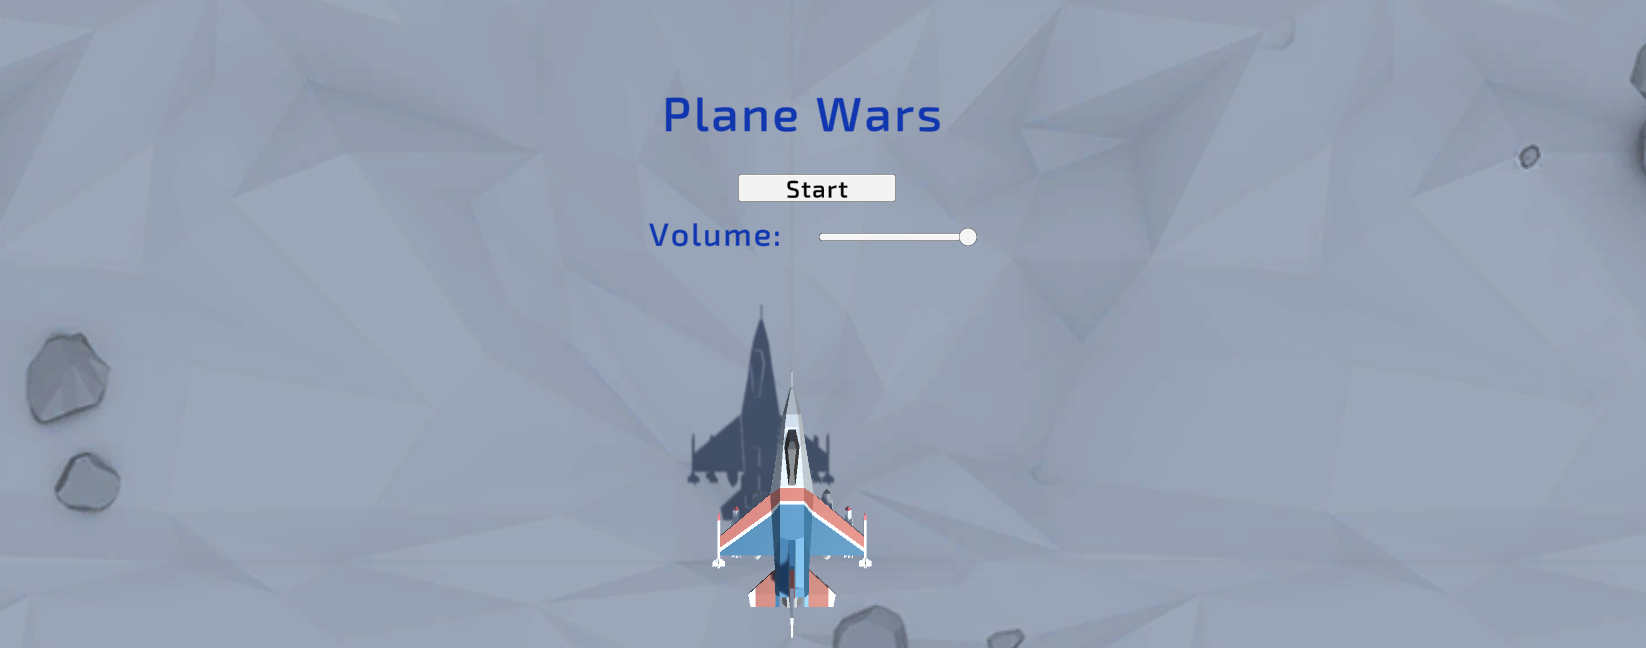 Plane Wars